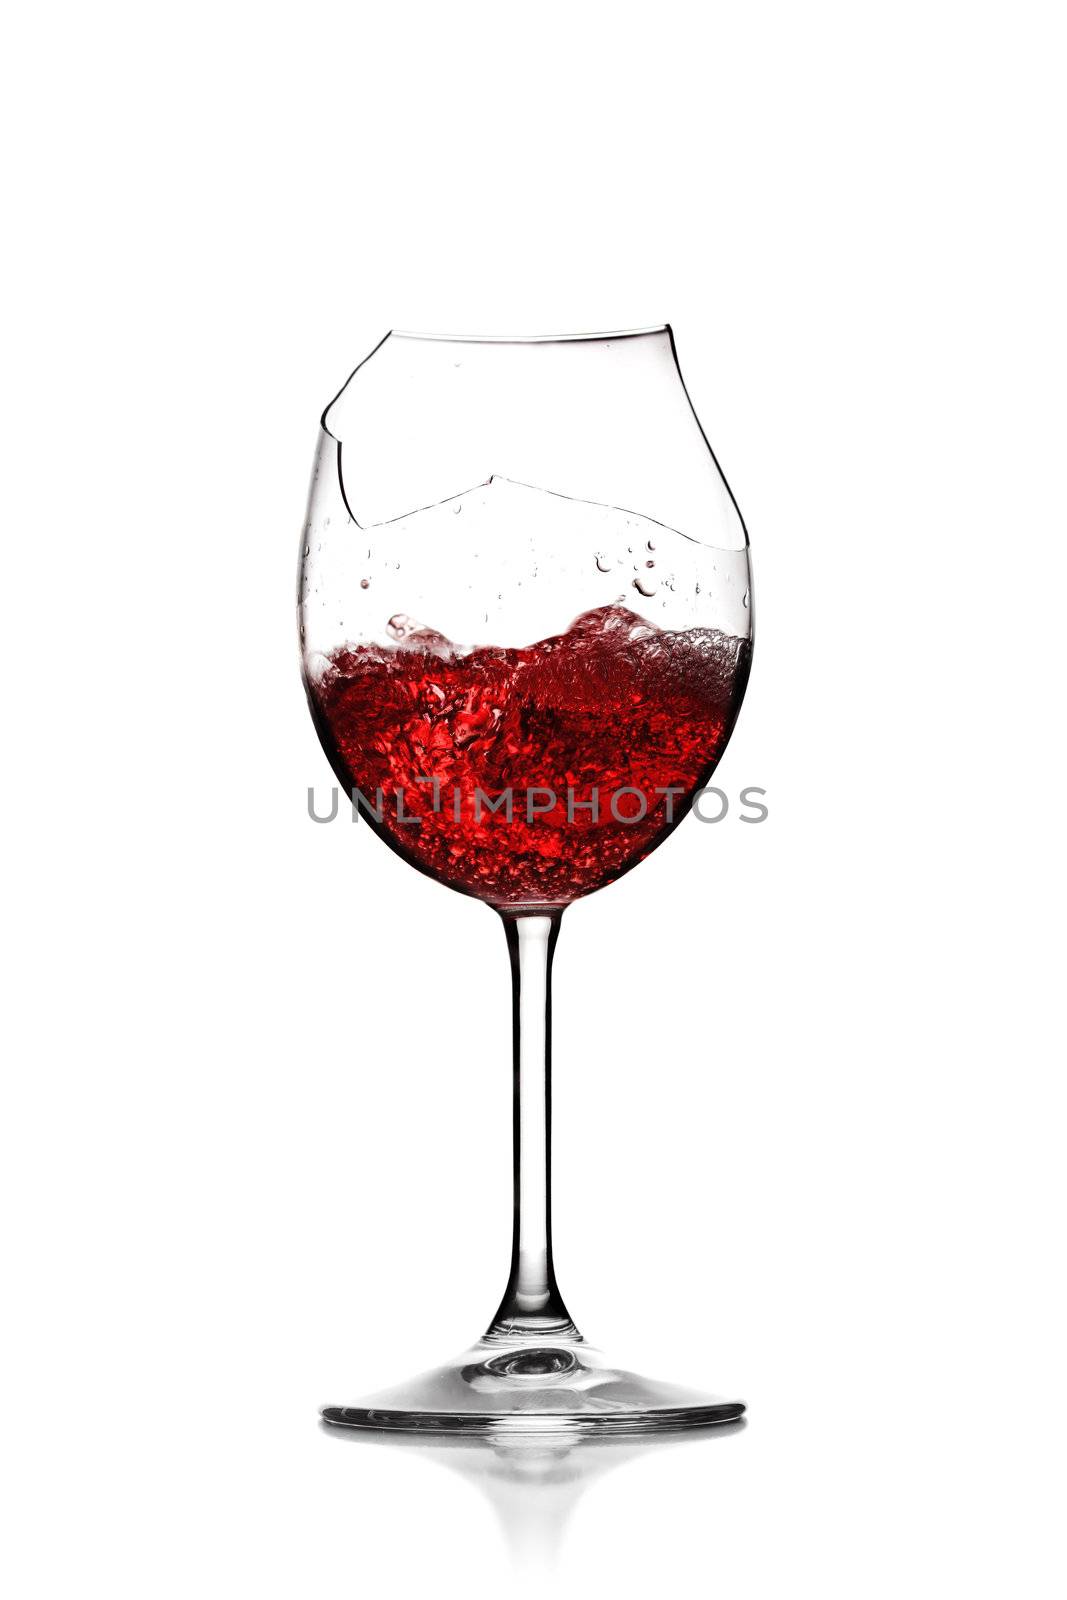 red wine splashing in broken glass, isolated on white